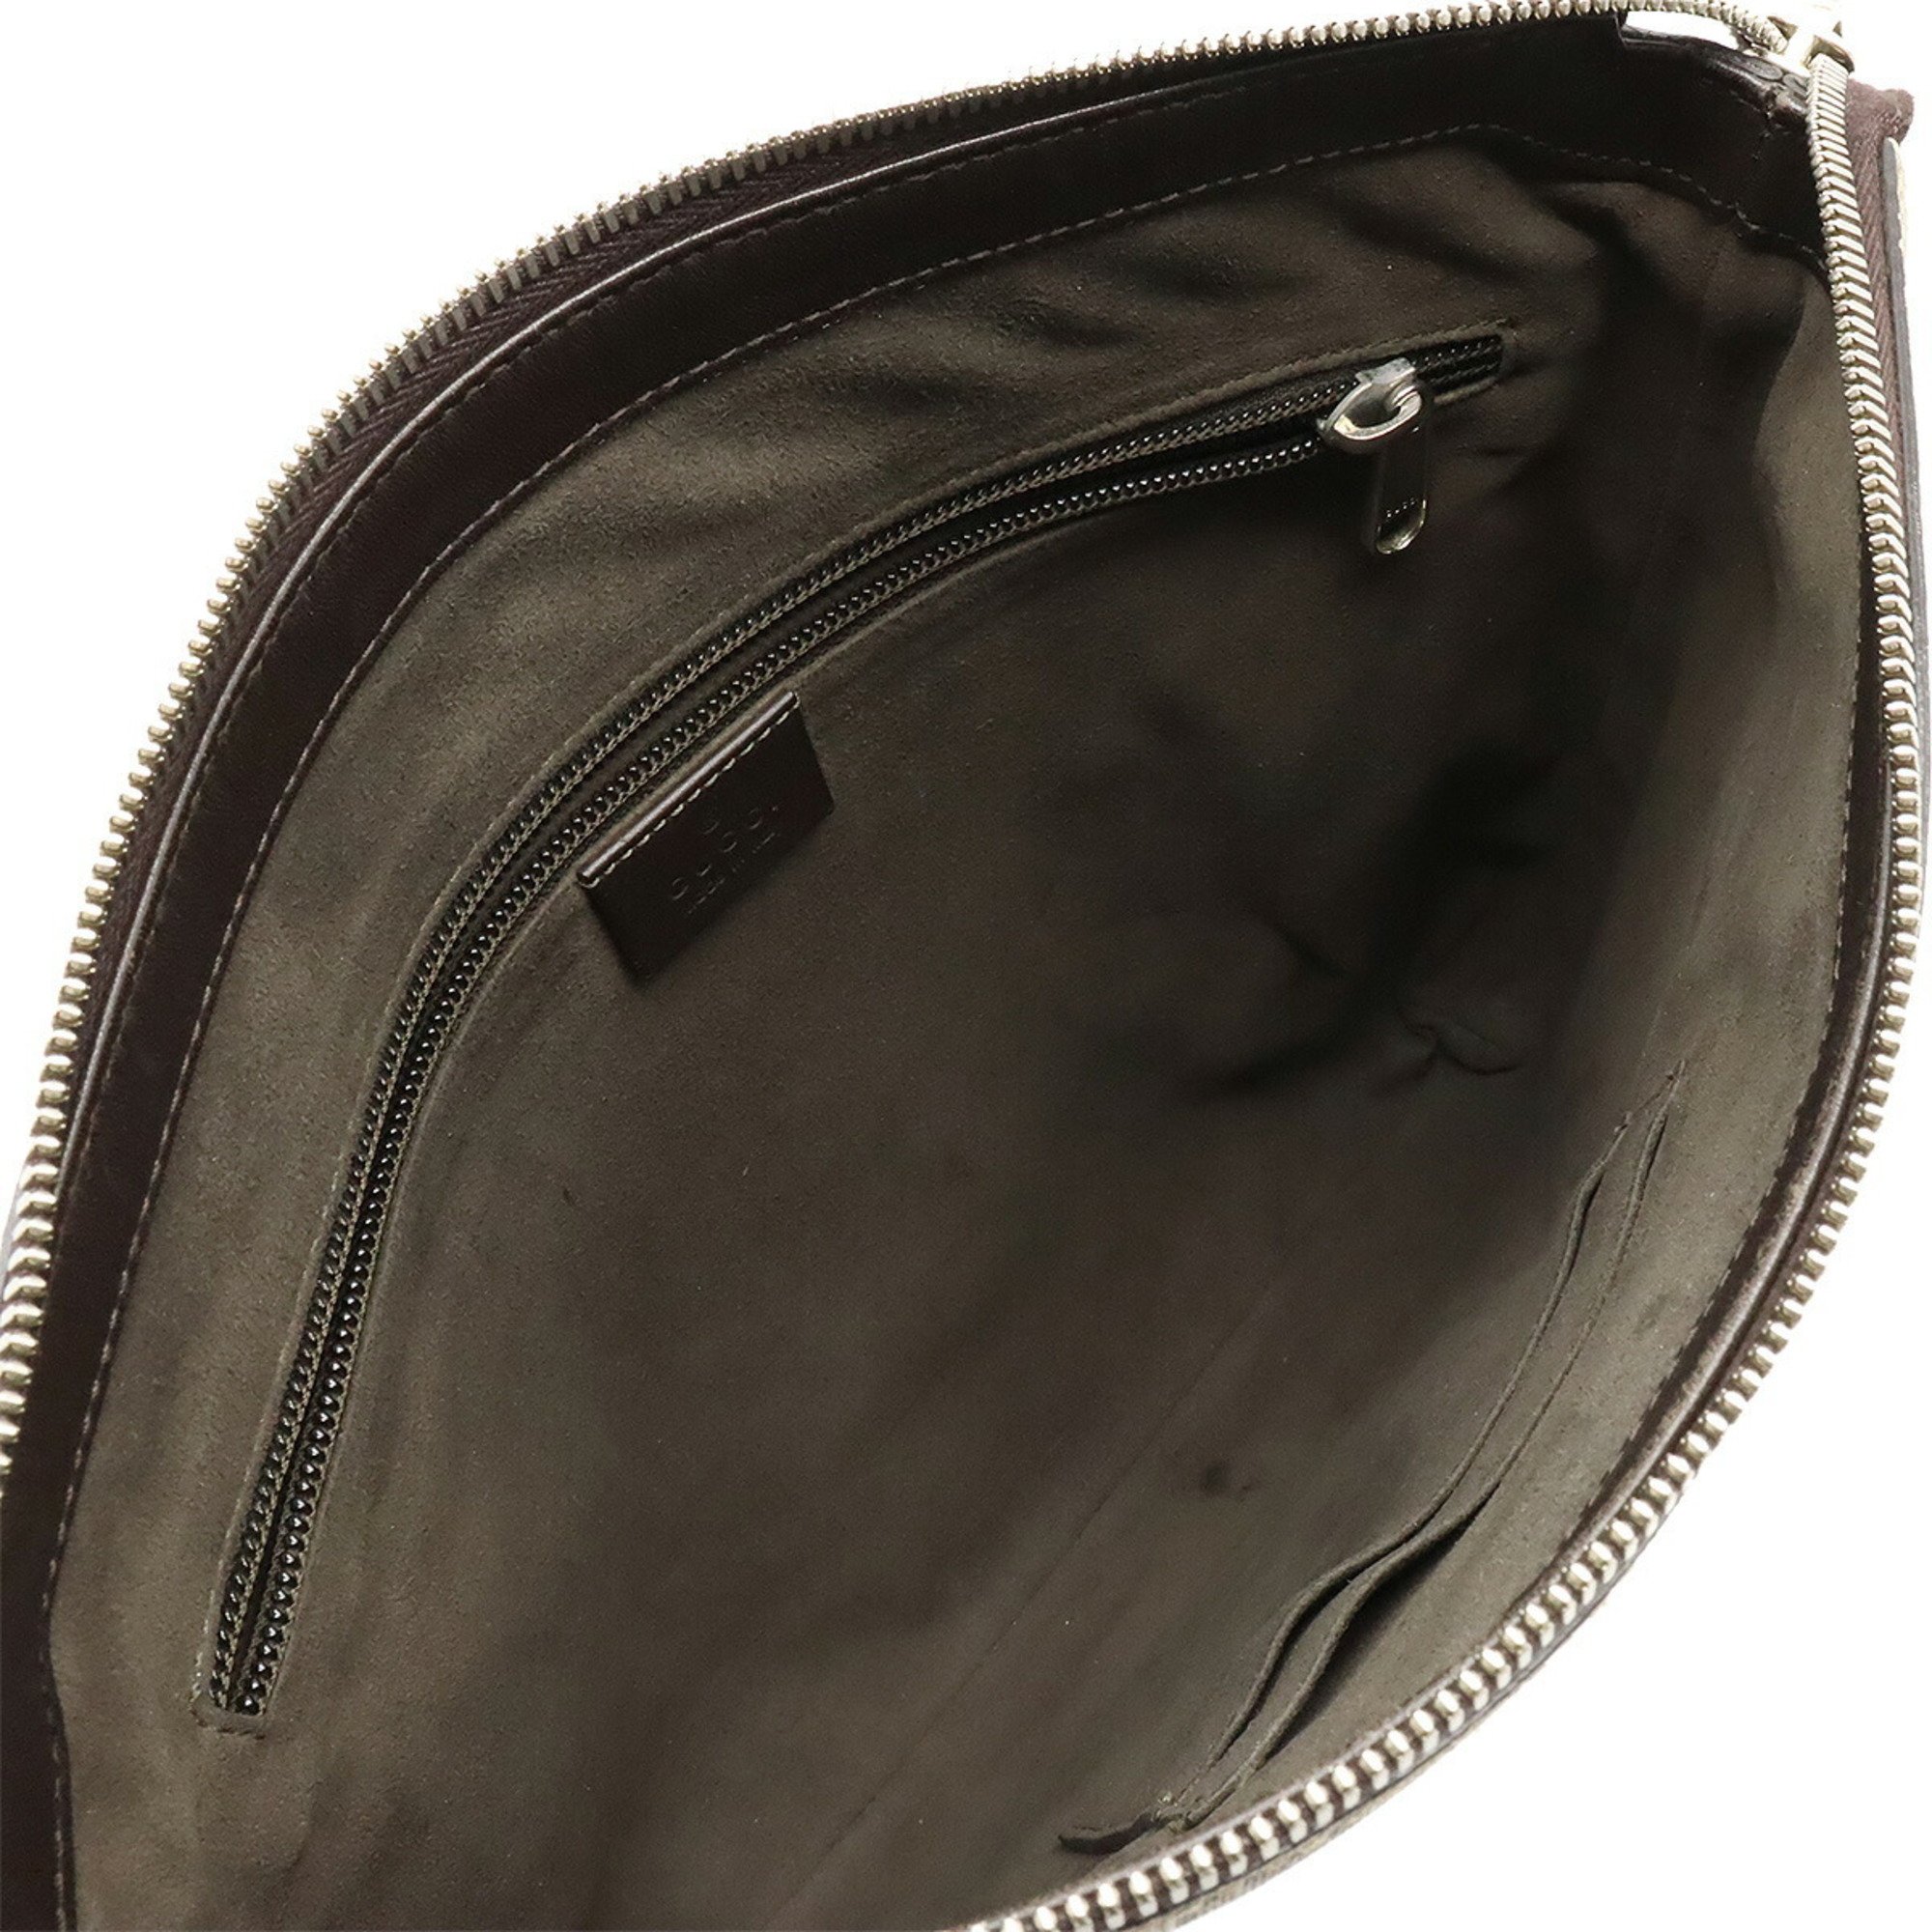 GUCCI GG Supreme Shoulder Bag PVC Leather Khaki Beige Dark Brown 406408